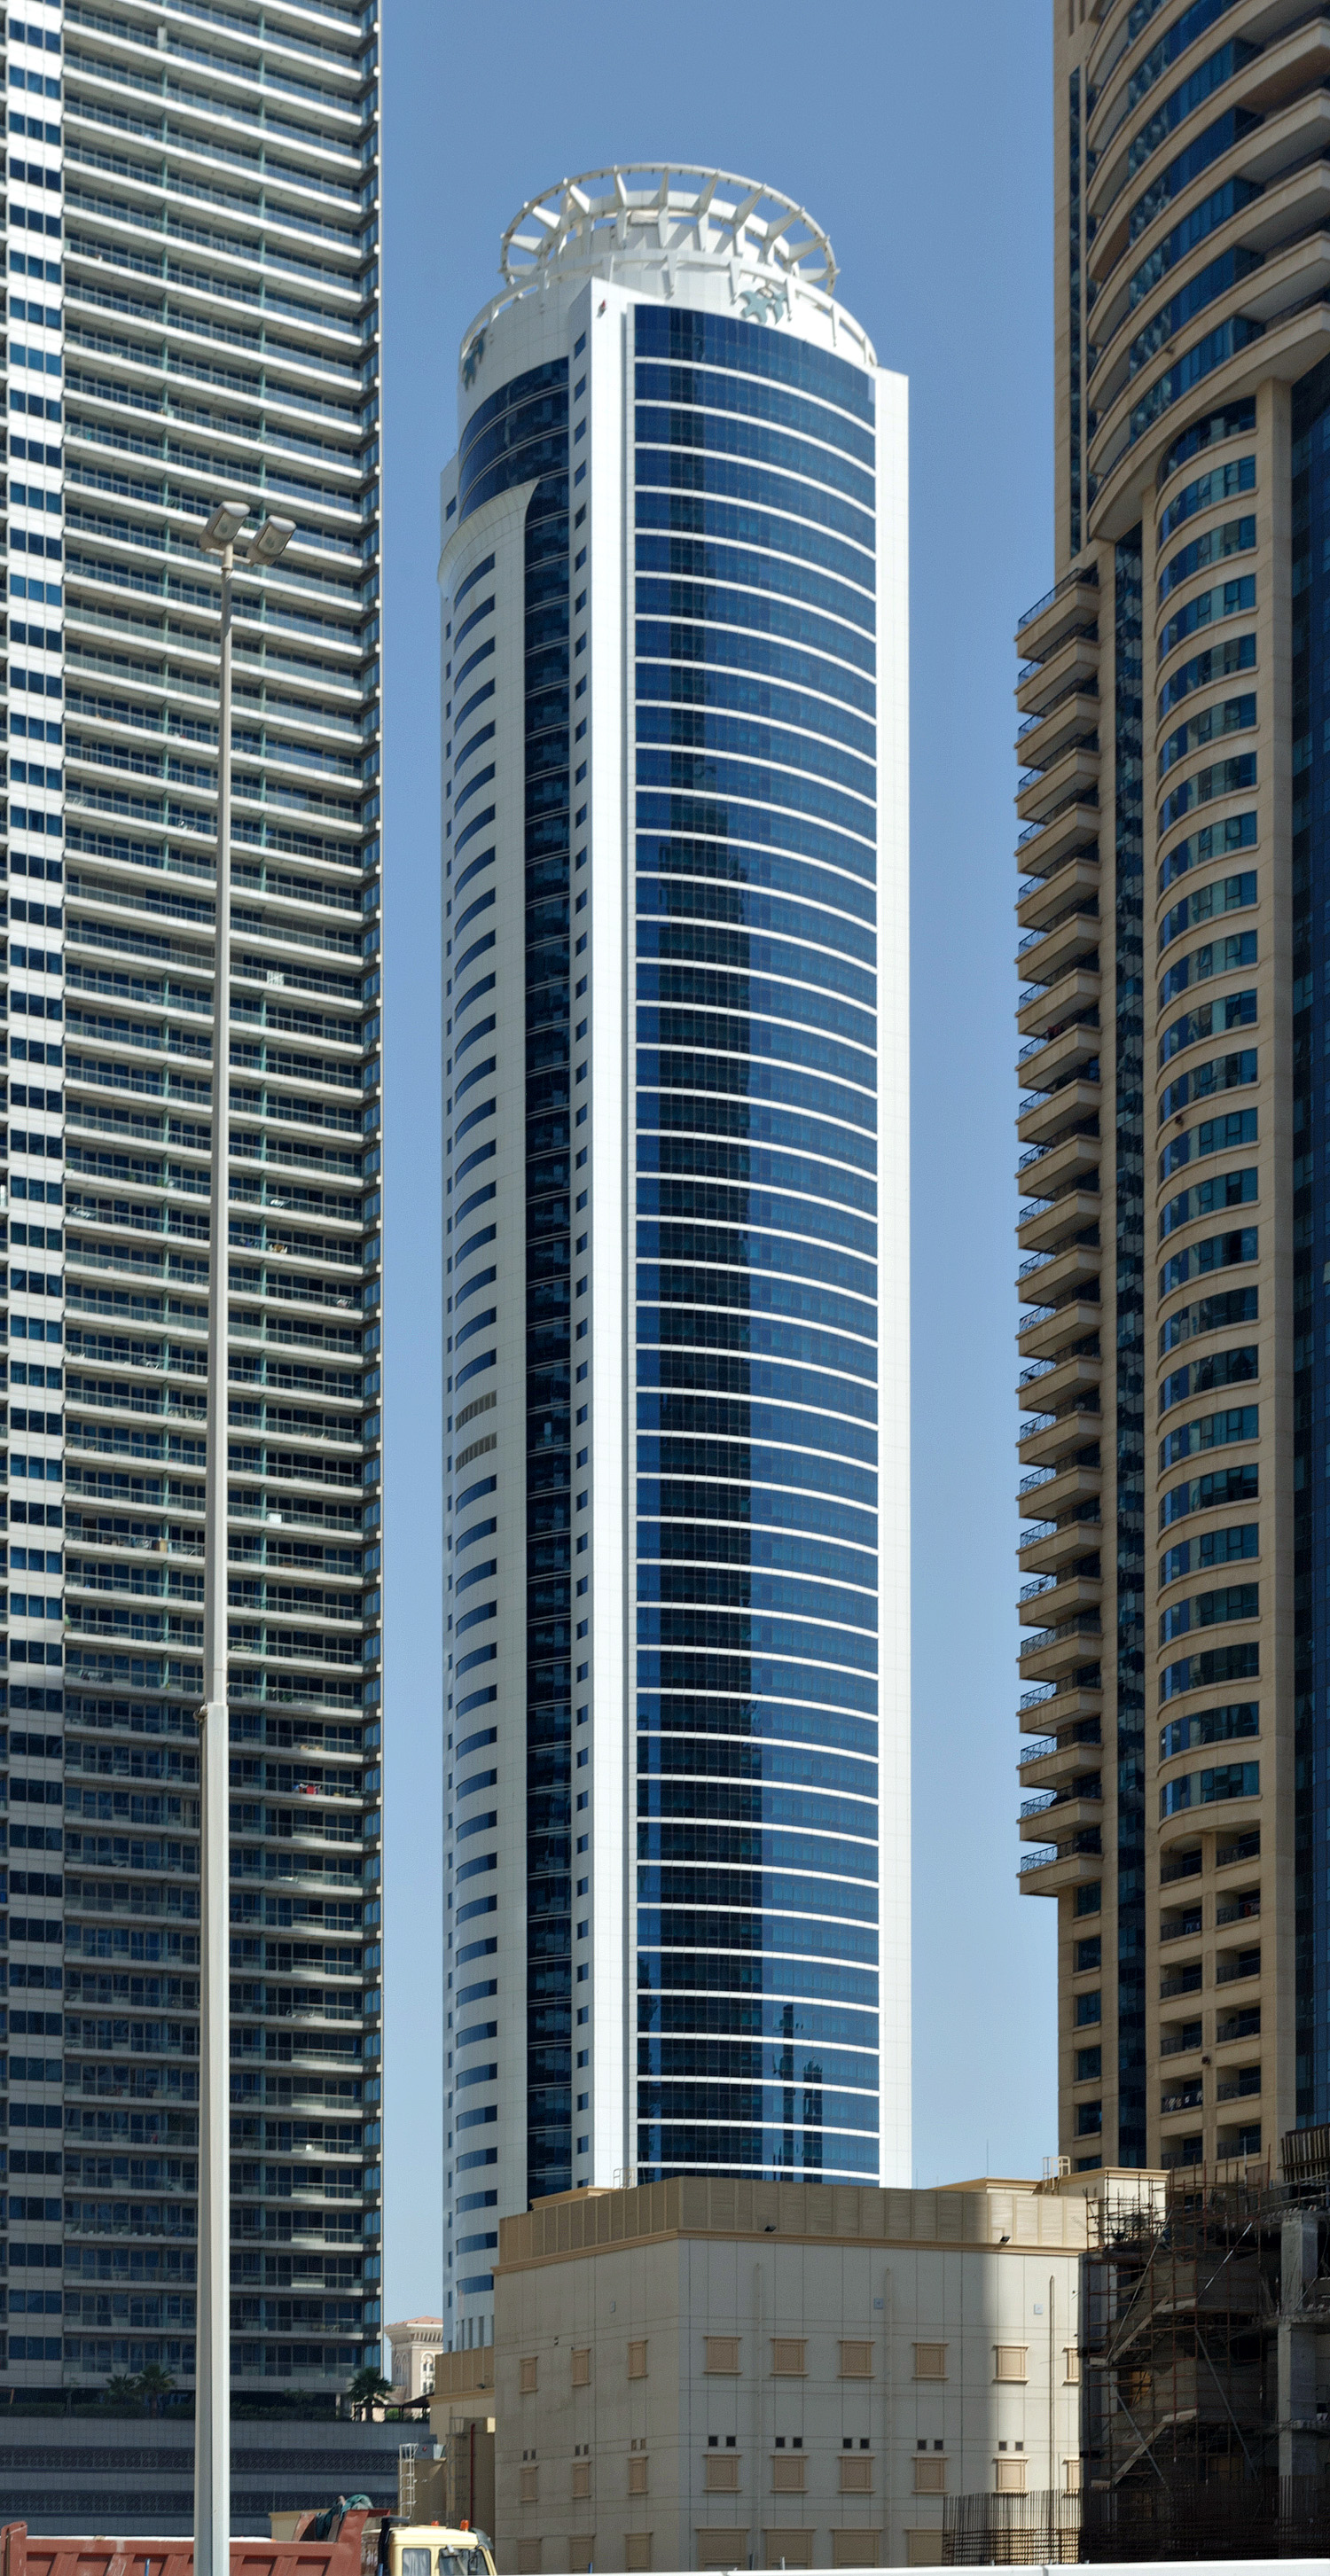 Tamani Hotel Marina, Dubai - View from the southeast. © Mathias Beinling